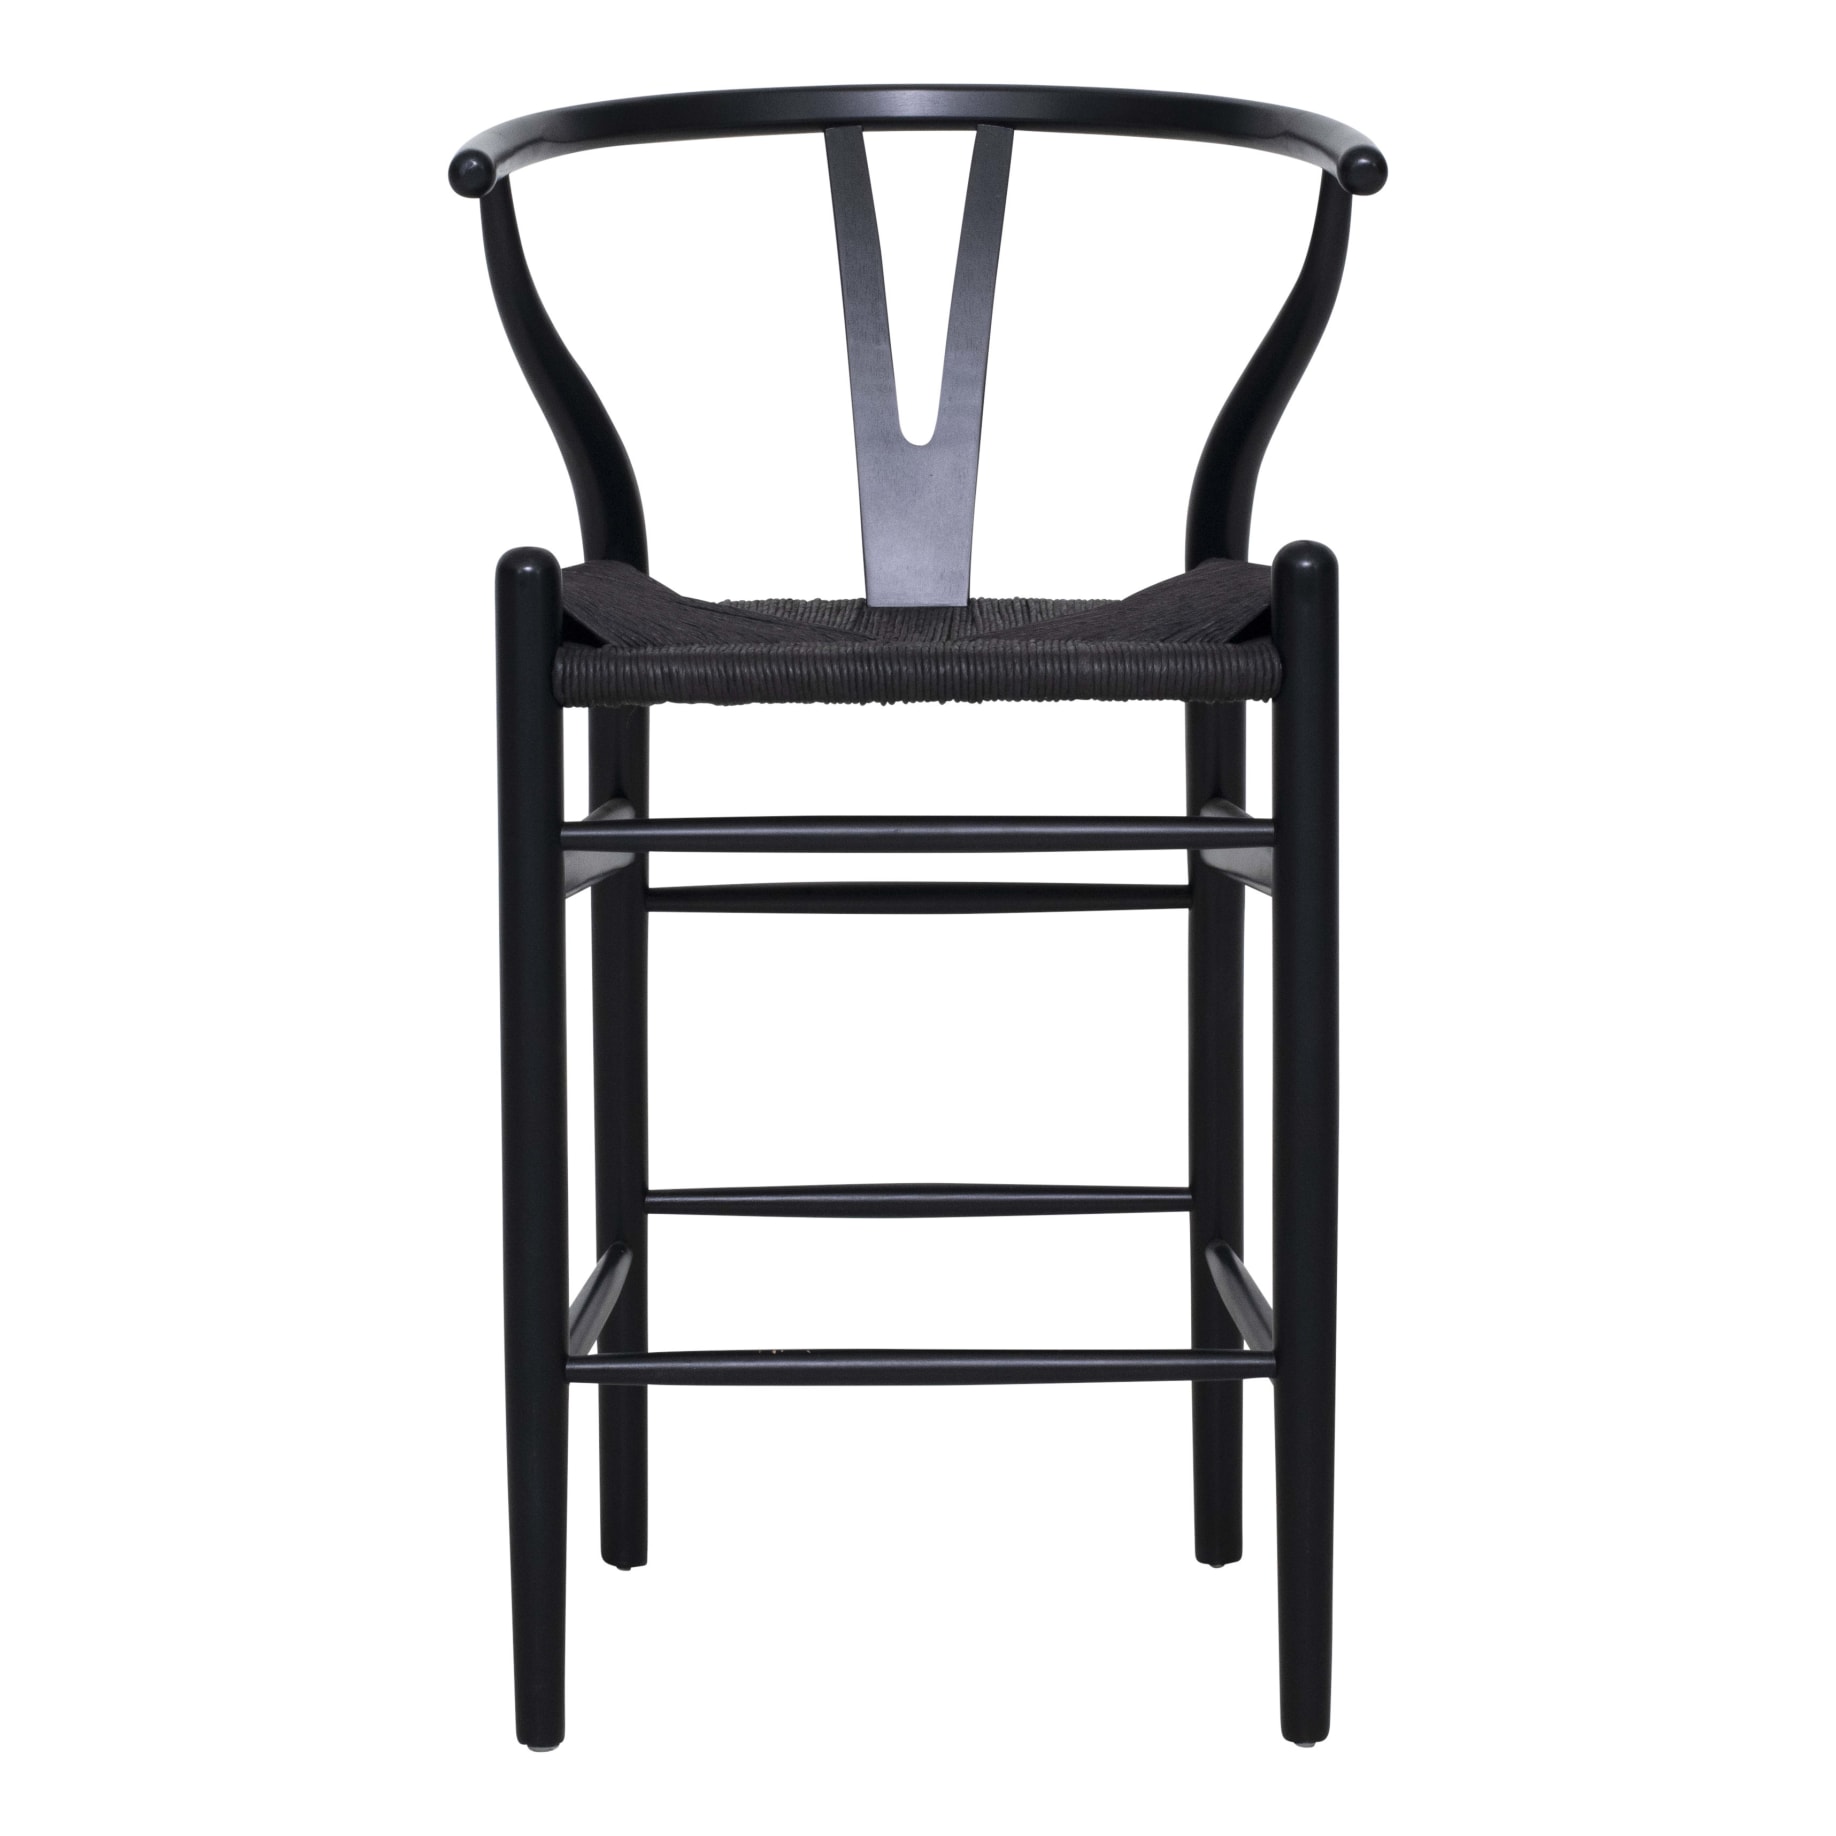 Megs Bar Chair in Black / Black Seat